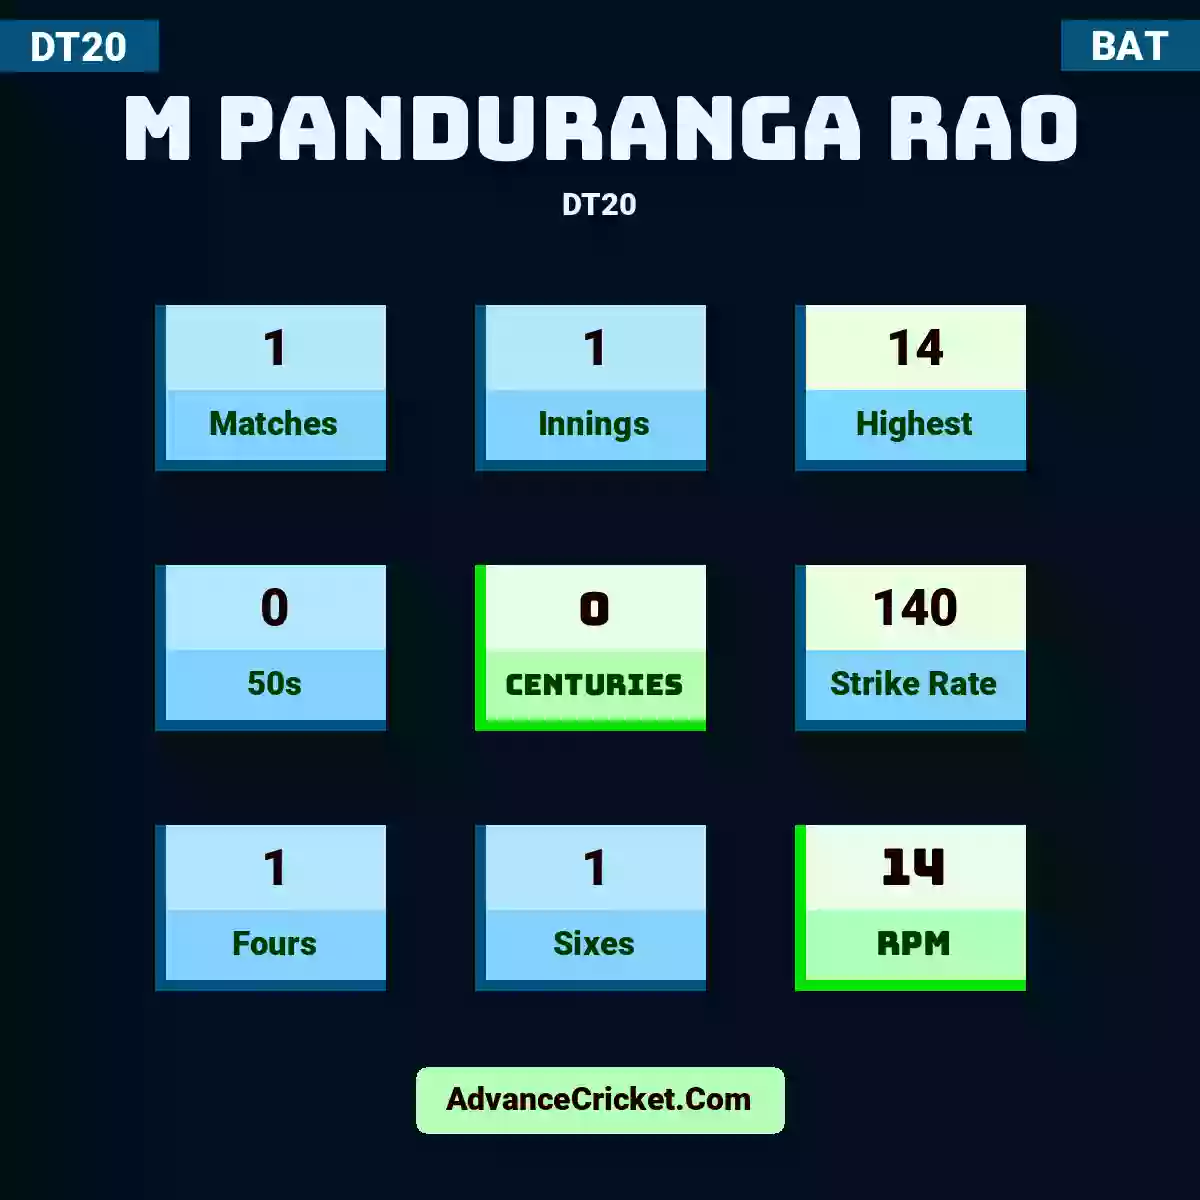 M PanduRanga Rao DT20 , M PanduRanga Rao played 1 matches, scored 14 runs as highest, 0 half-centuries, and 0 centuries, with a strike rate of 140. M.PanduRanga.Rao hit 1 fours and 1 sixes, with an RPM of 14.